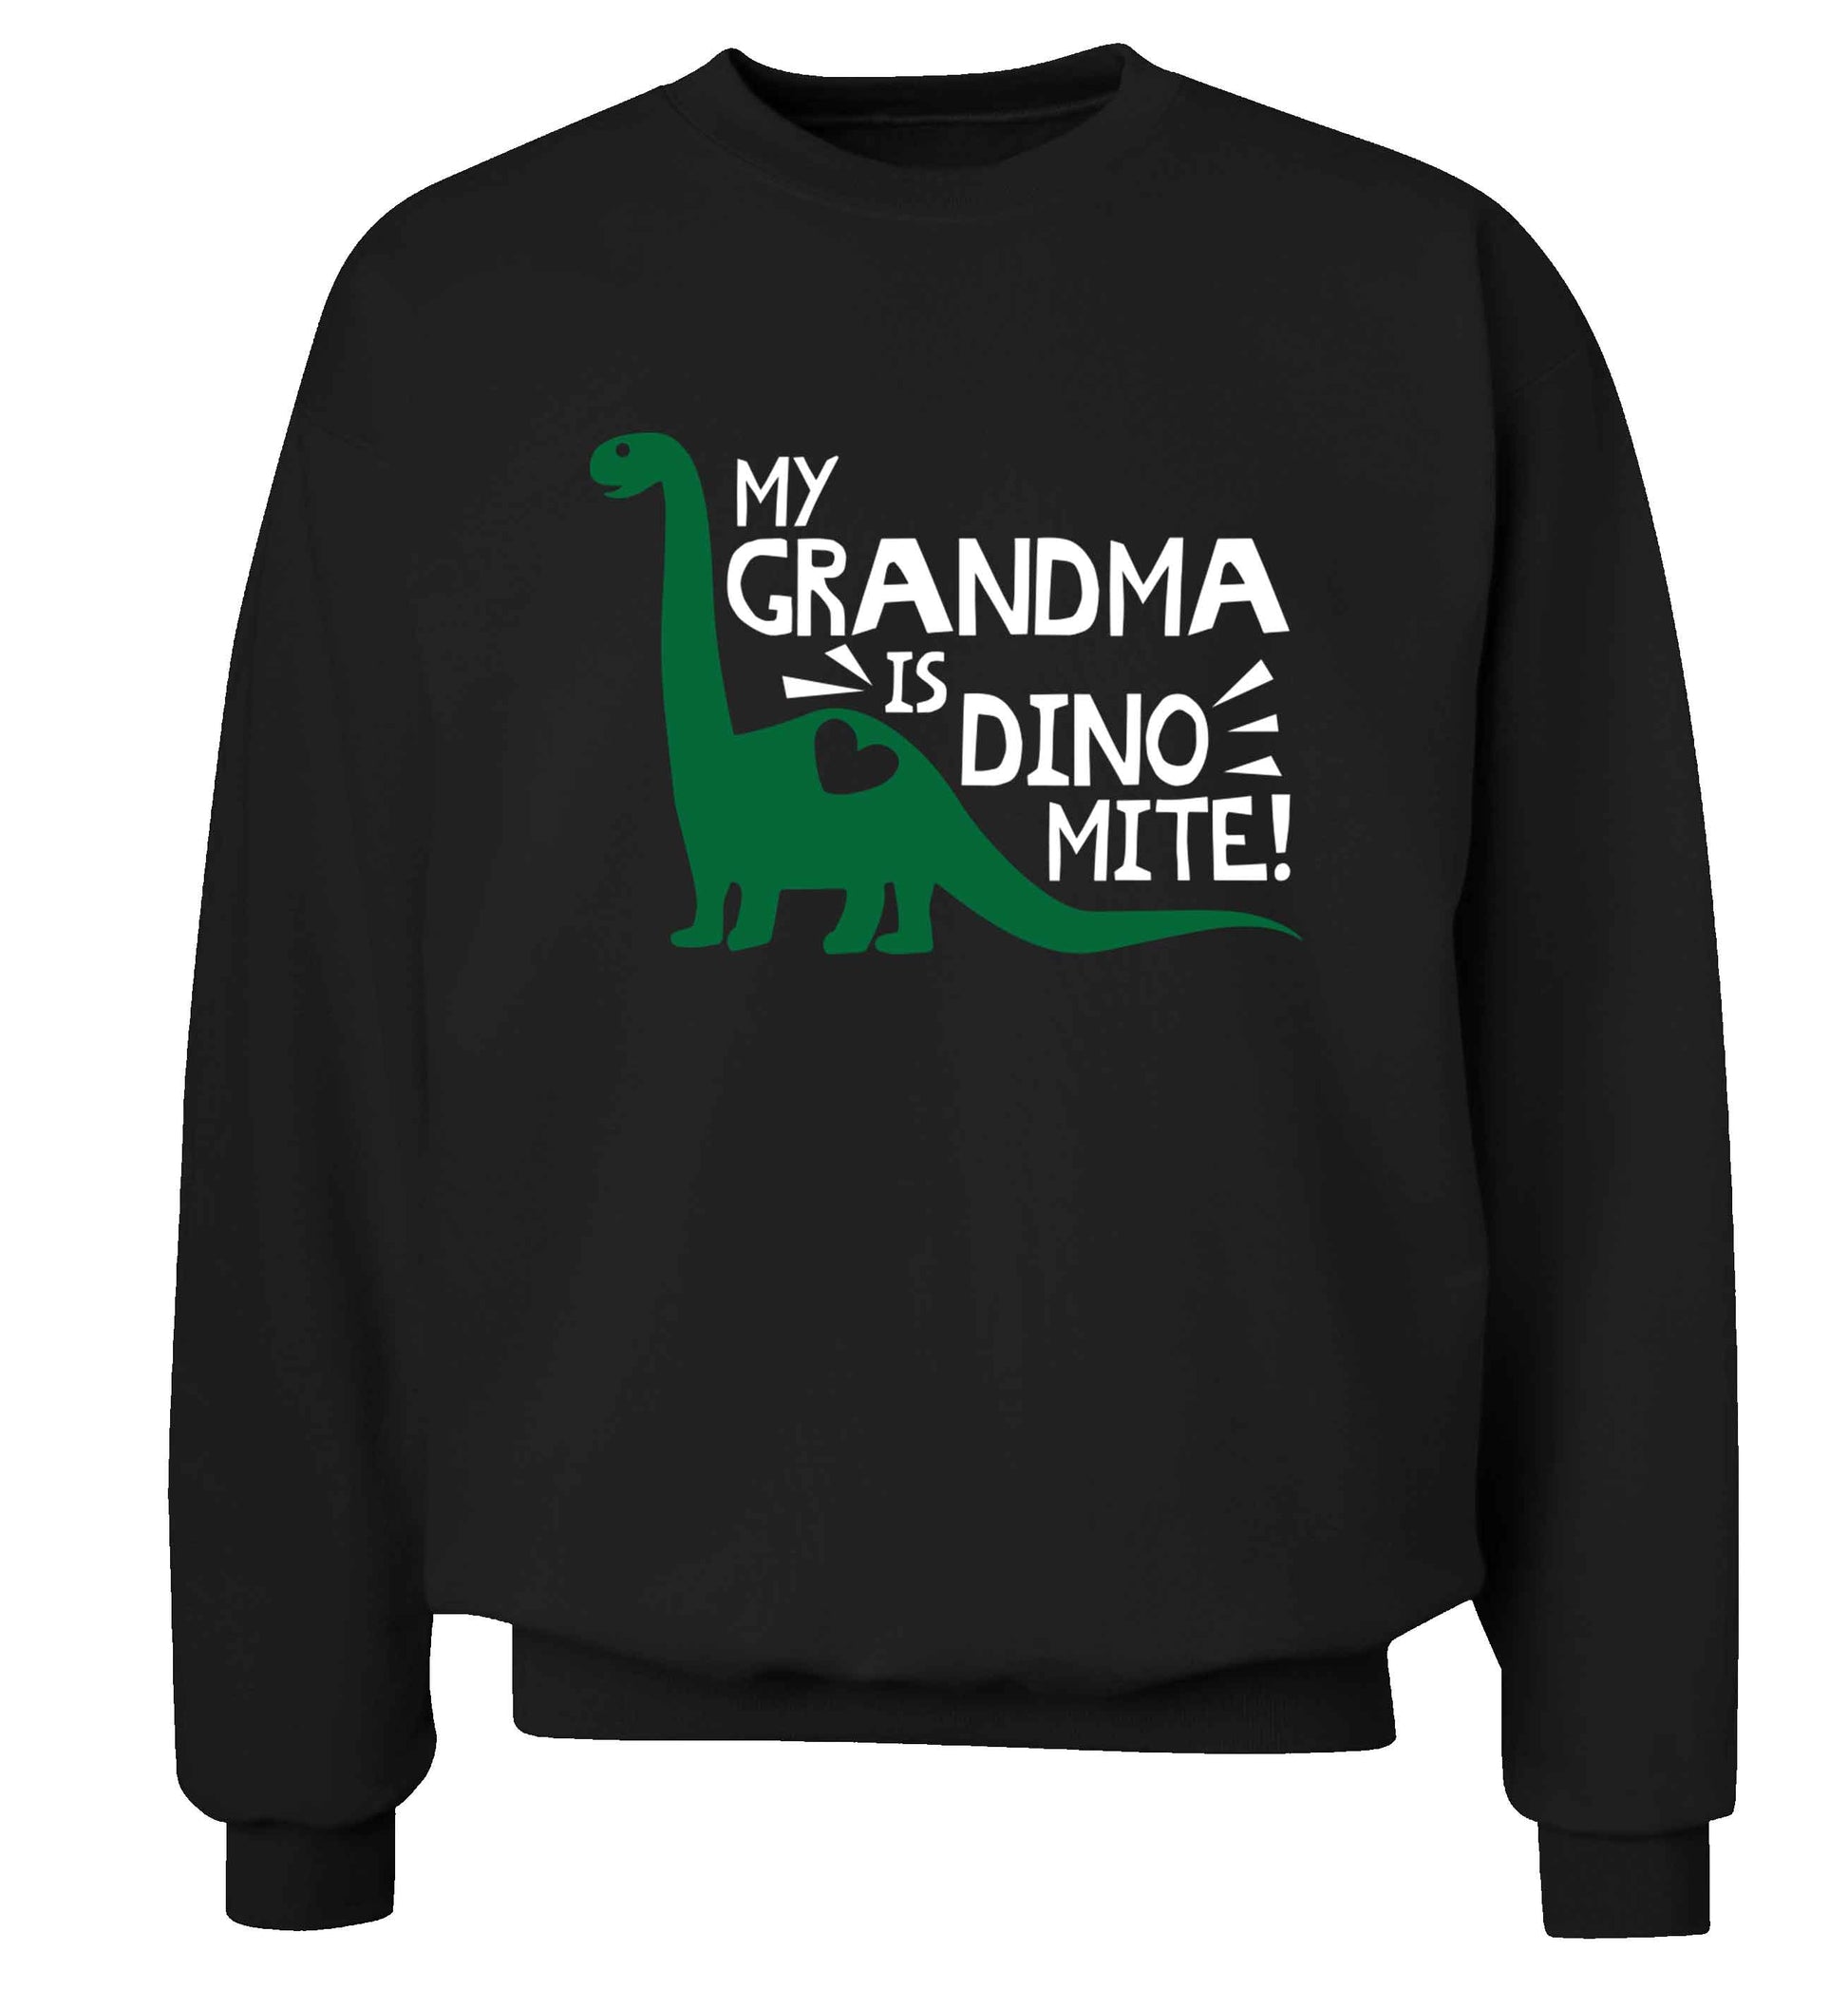 My grandma is dinomite! Adult's unisex black Sweater 2XL